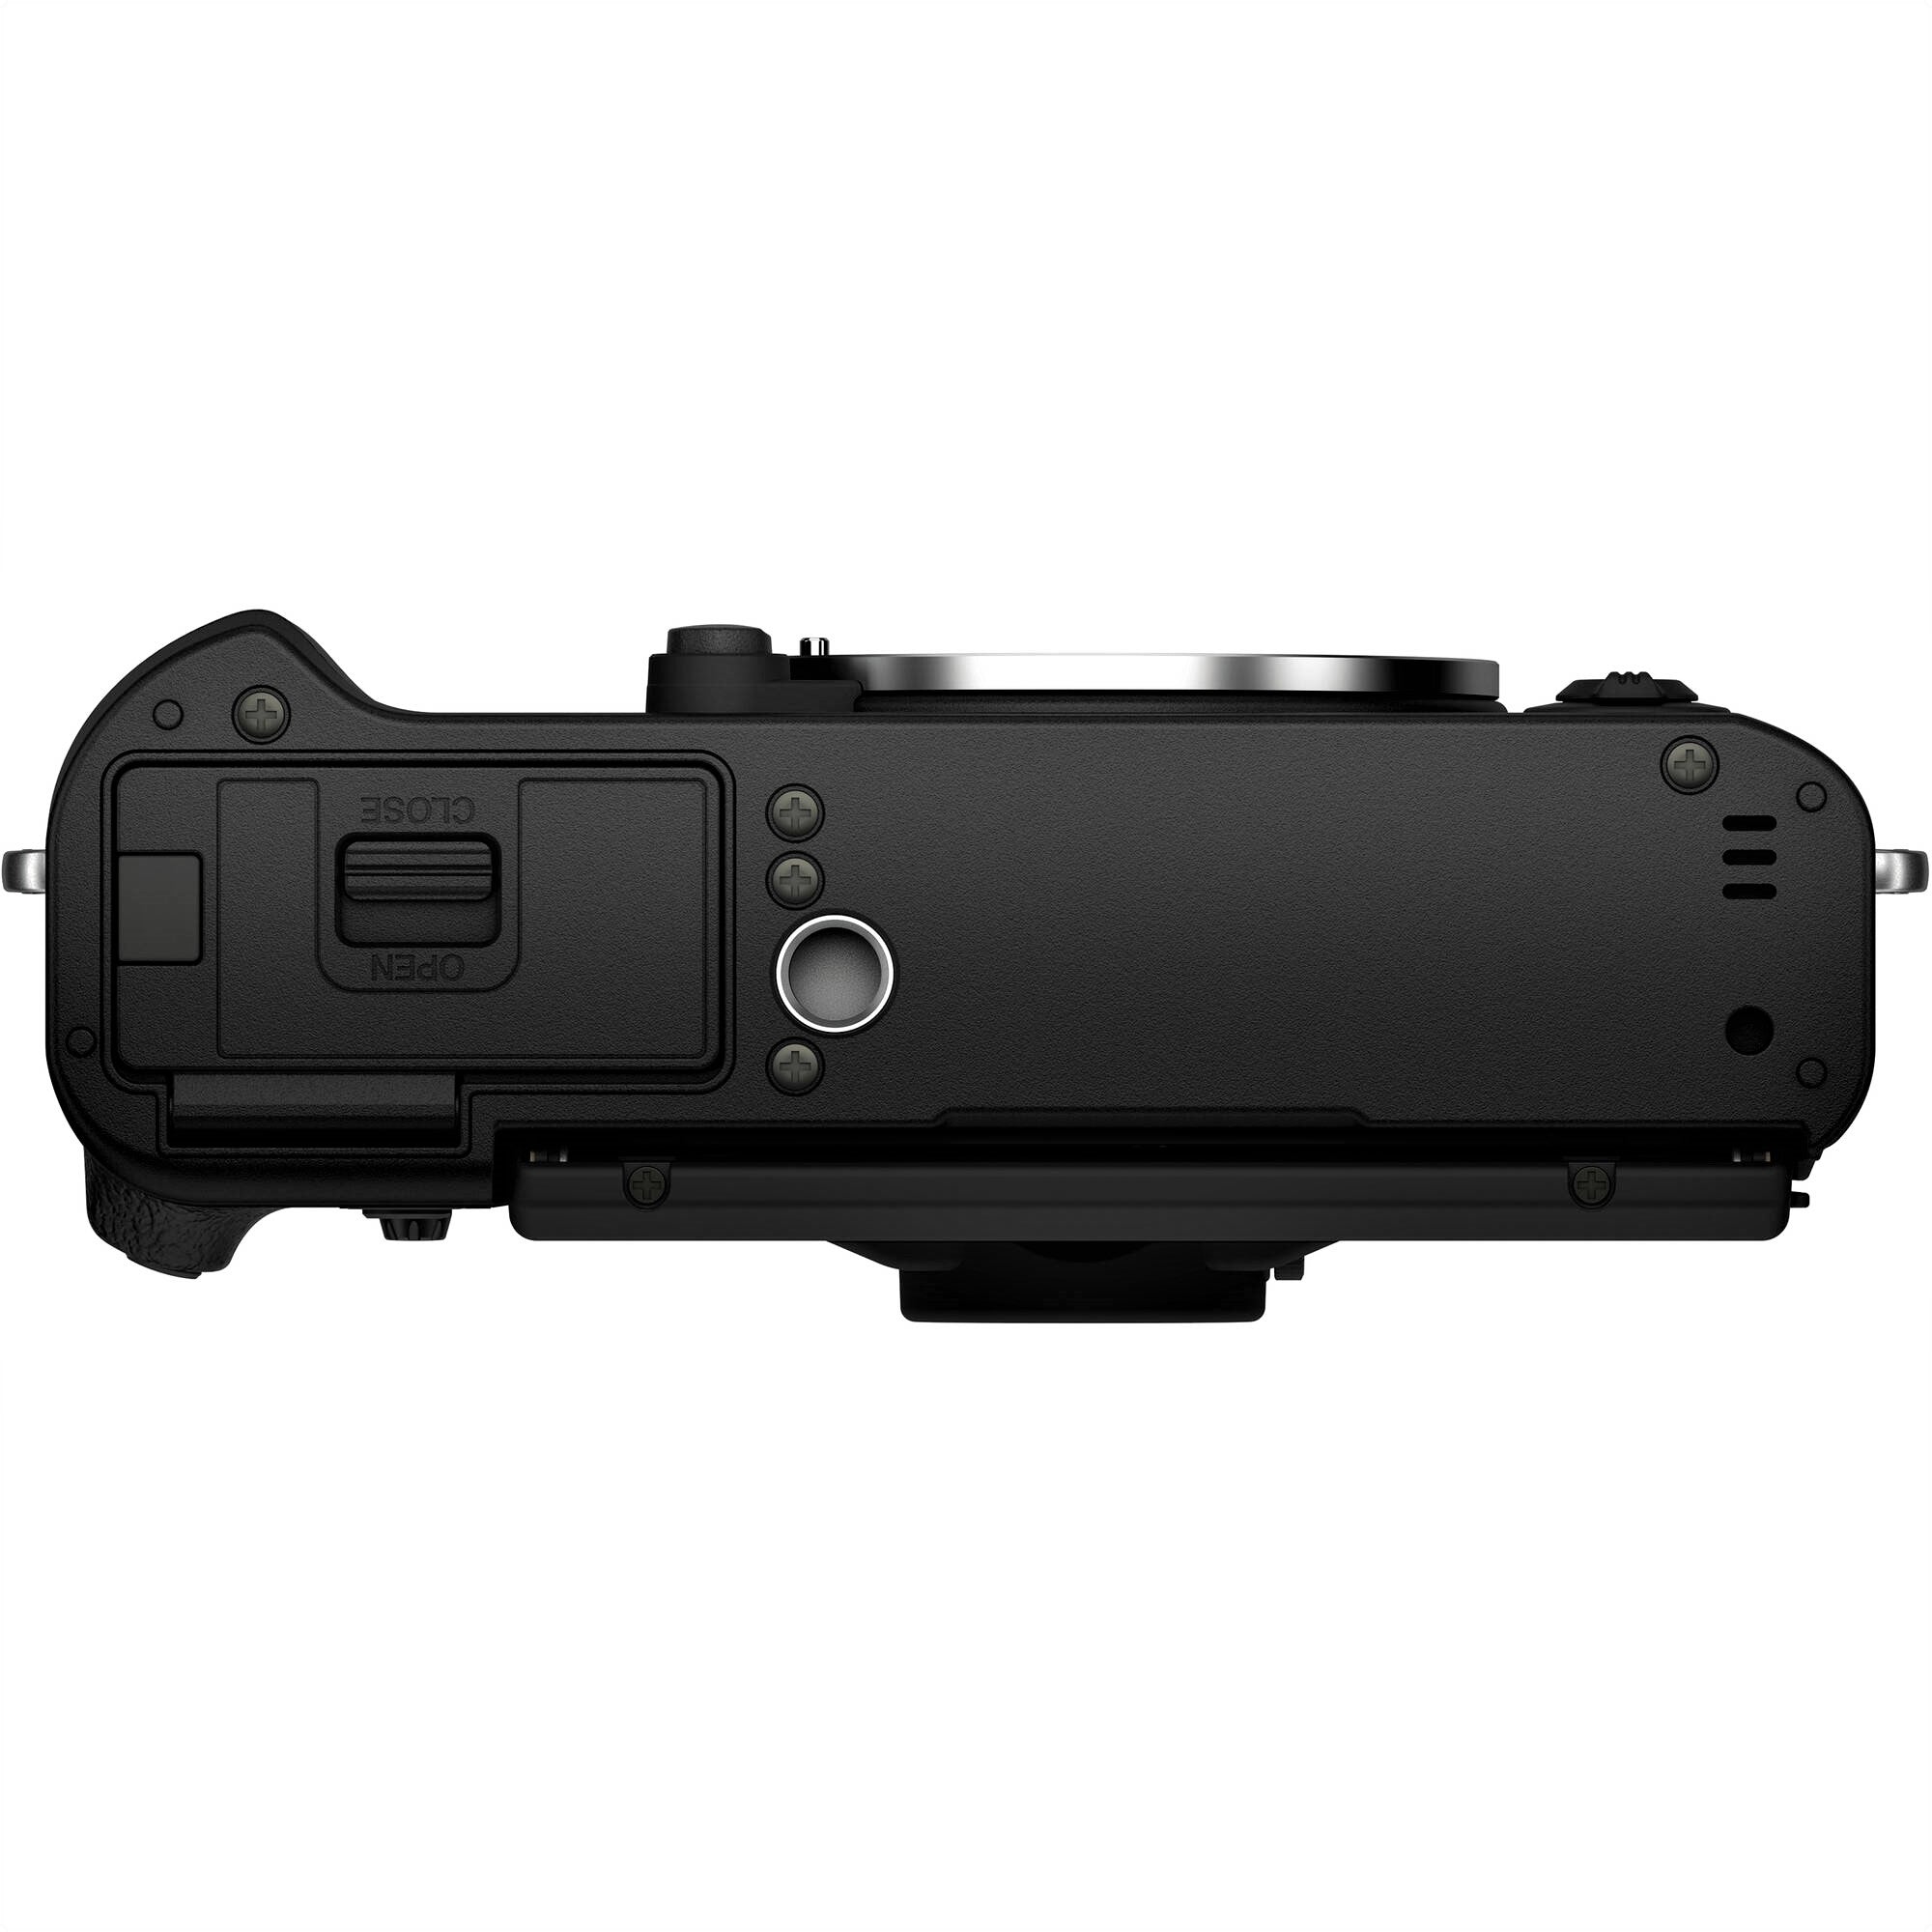 Fujifilm X-T30 II Mirrorless Camera with XC 15-45mm OIS PZ Lens (Black) - Bottom View